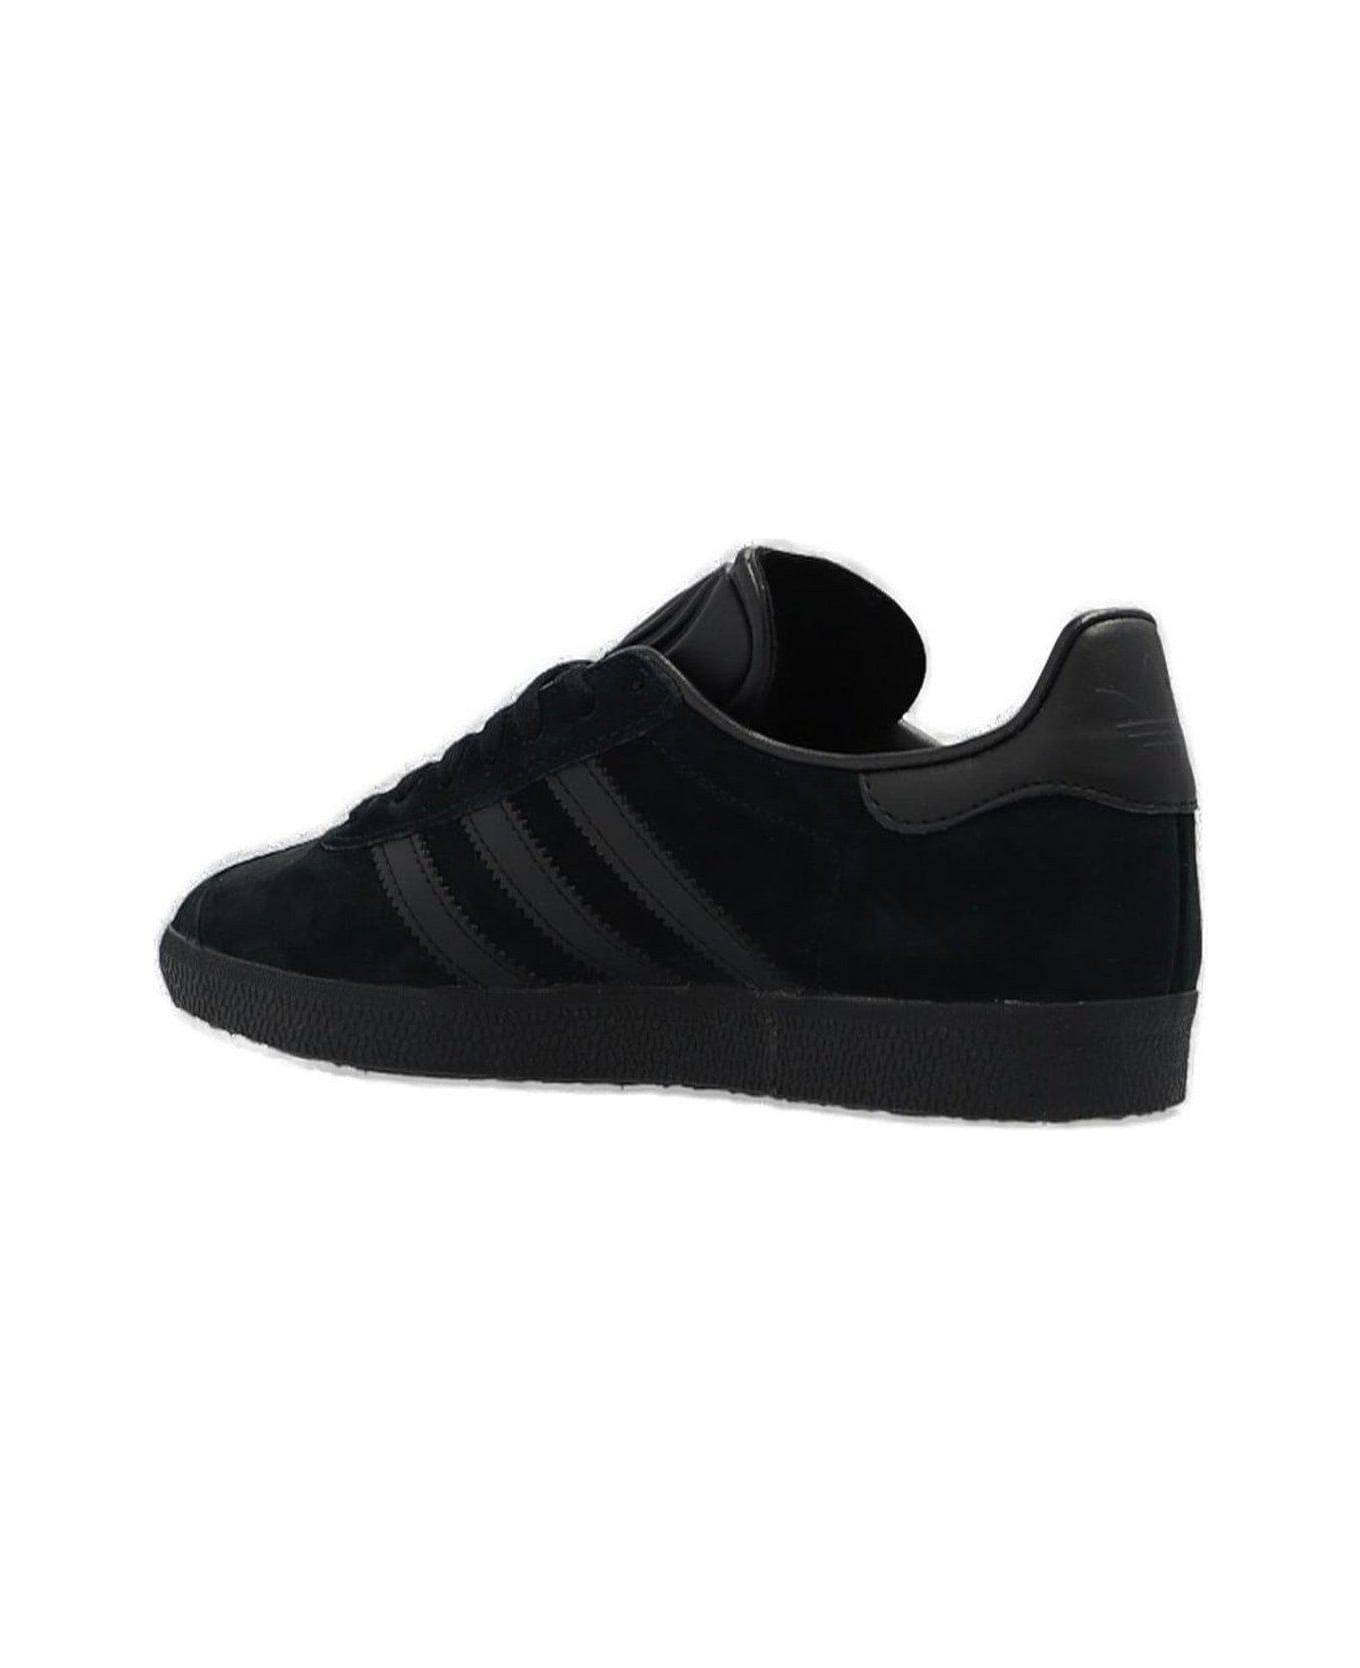 Adidas Originals Gazelle Lace-up Sneakers - Cblack/cblack/cblack